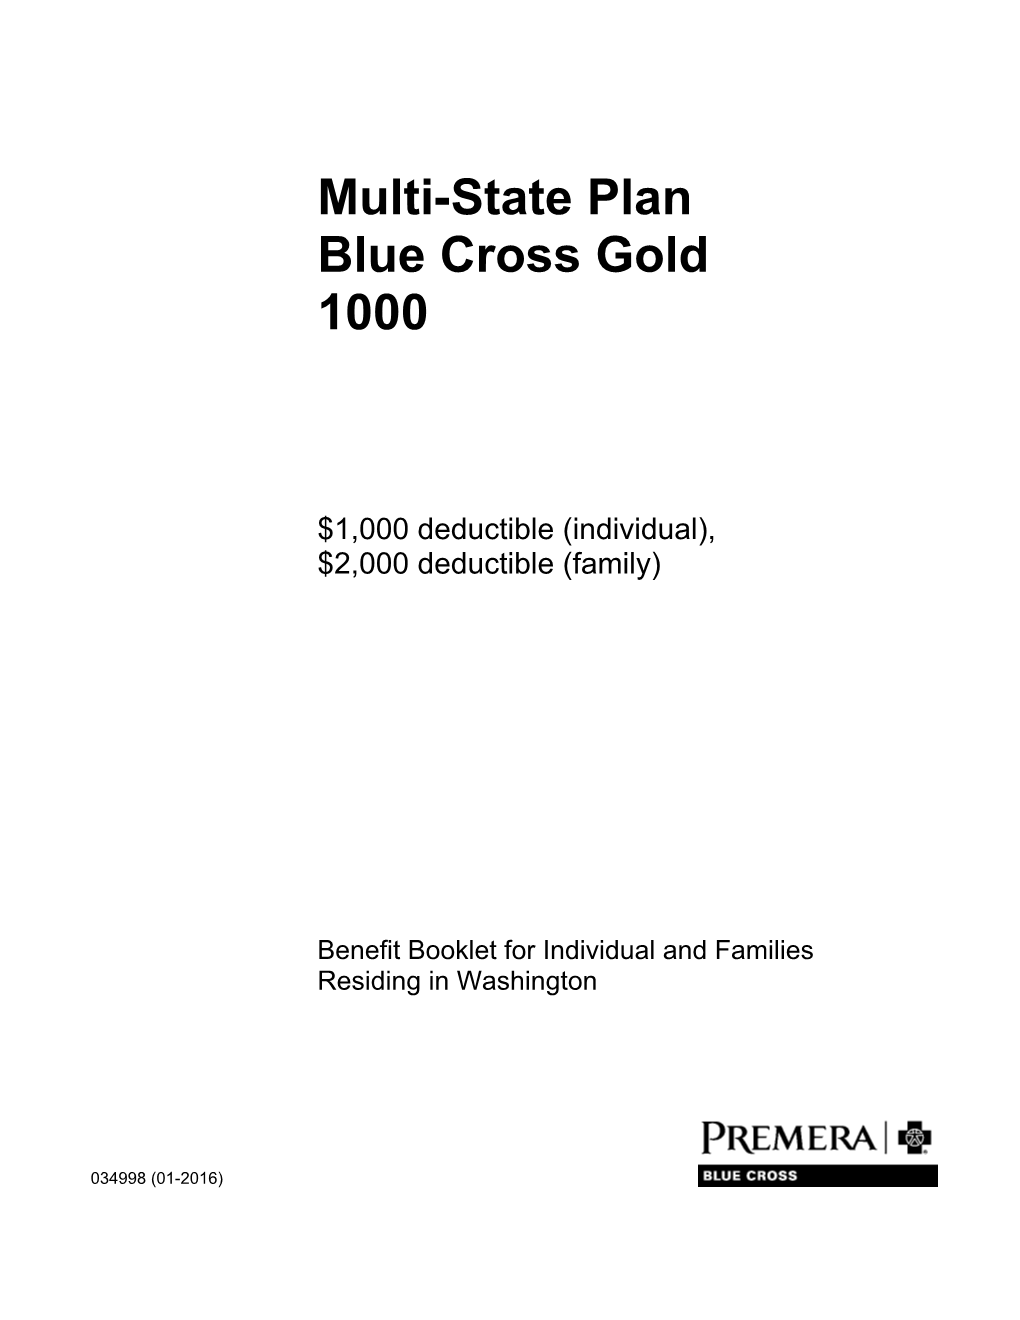 Multi-State Plan Blue Cross Gold 1000 Inside